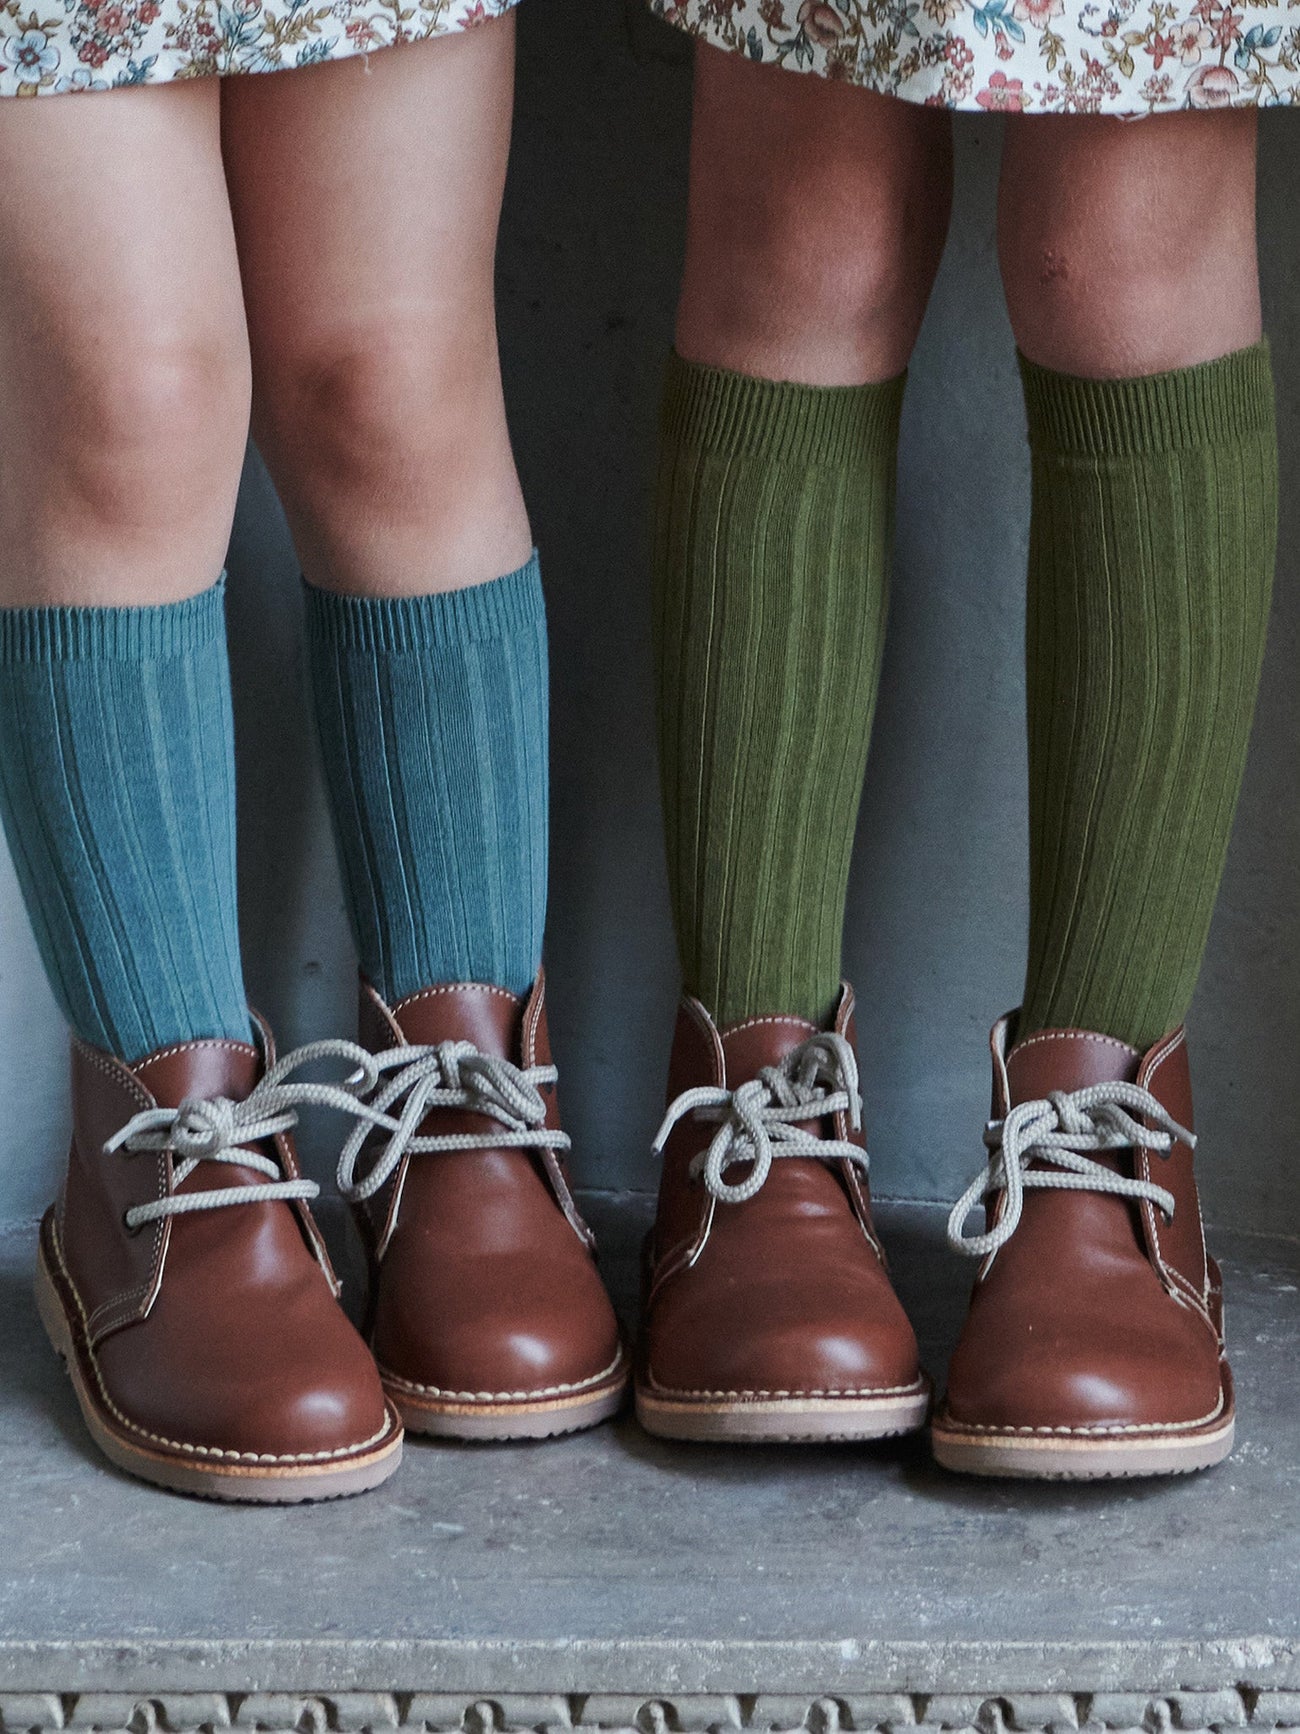 Olive Green Ribbed Knee High Kids Socks